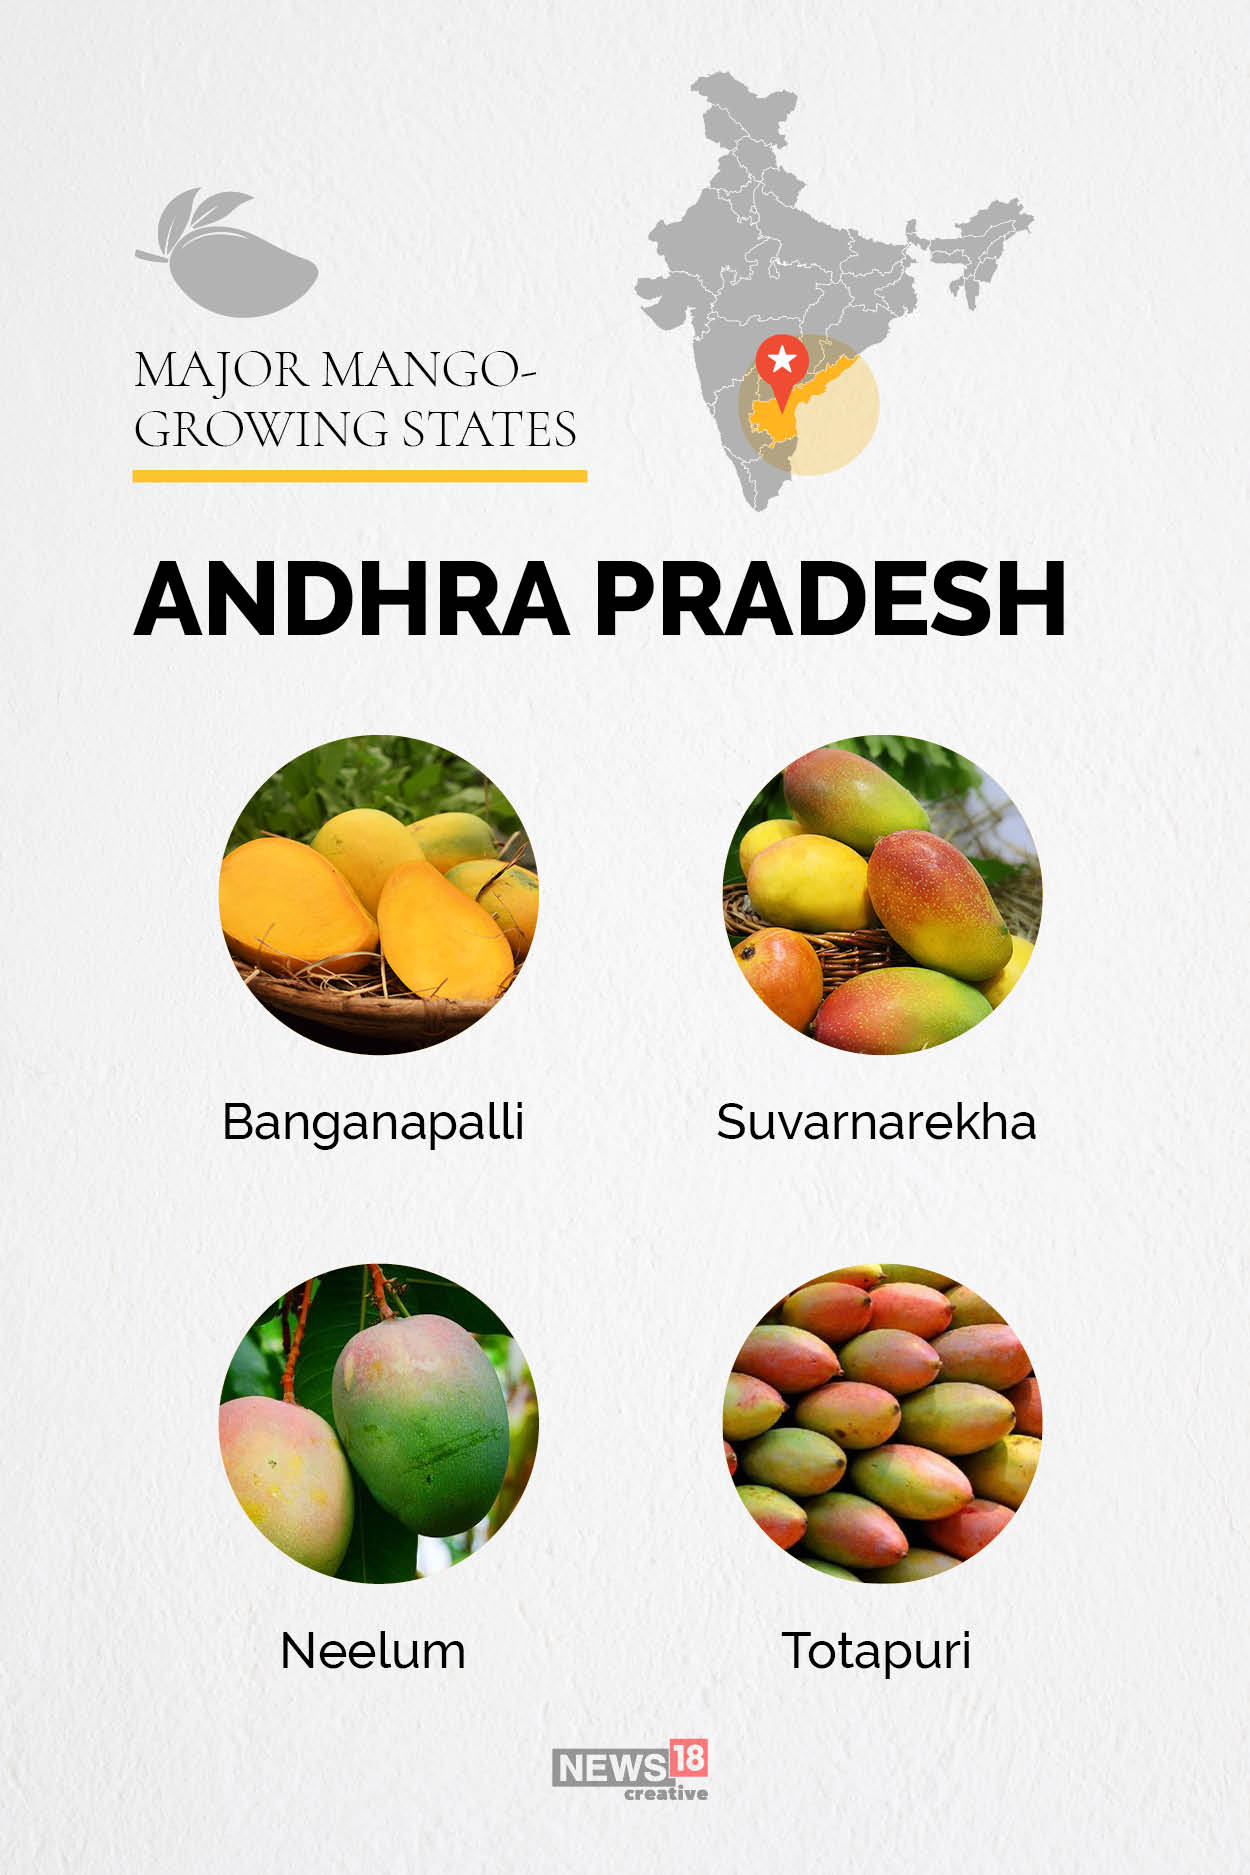 The mango map of India